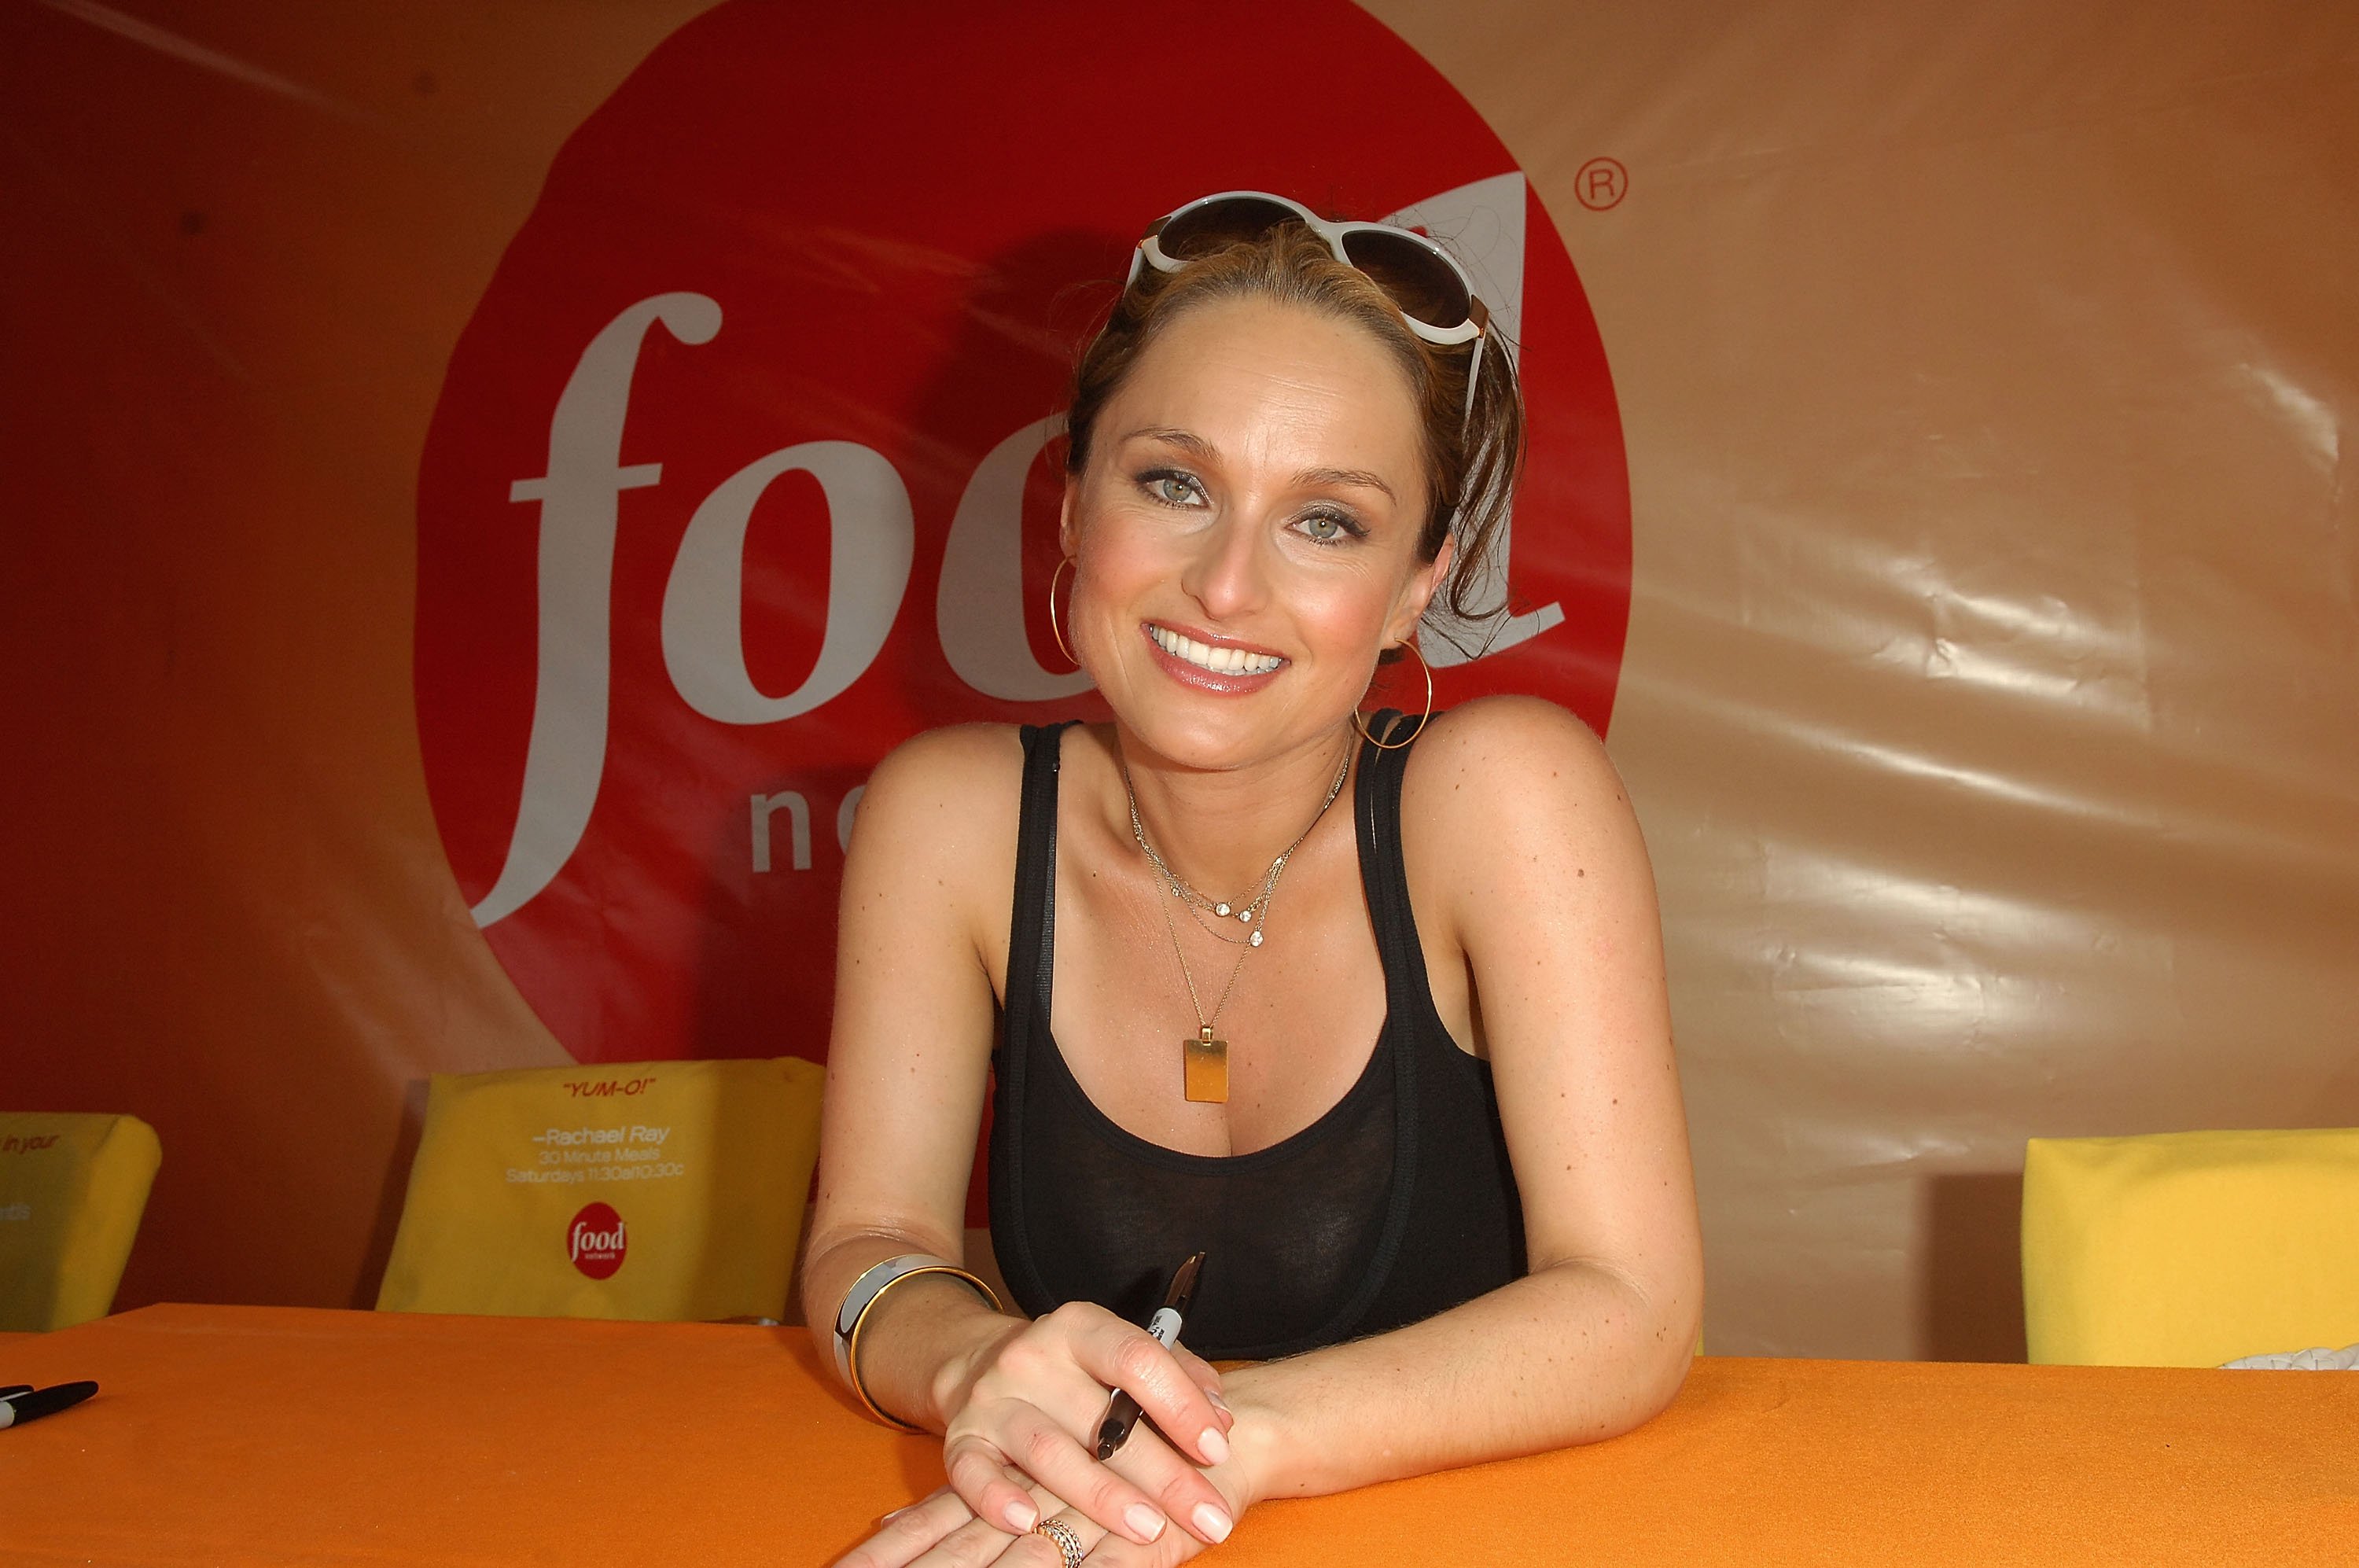 Culinary star Giada De Laurentiis wears a black tank top in this photograph.